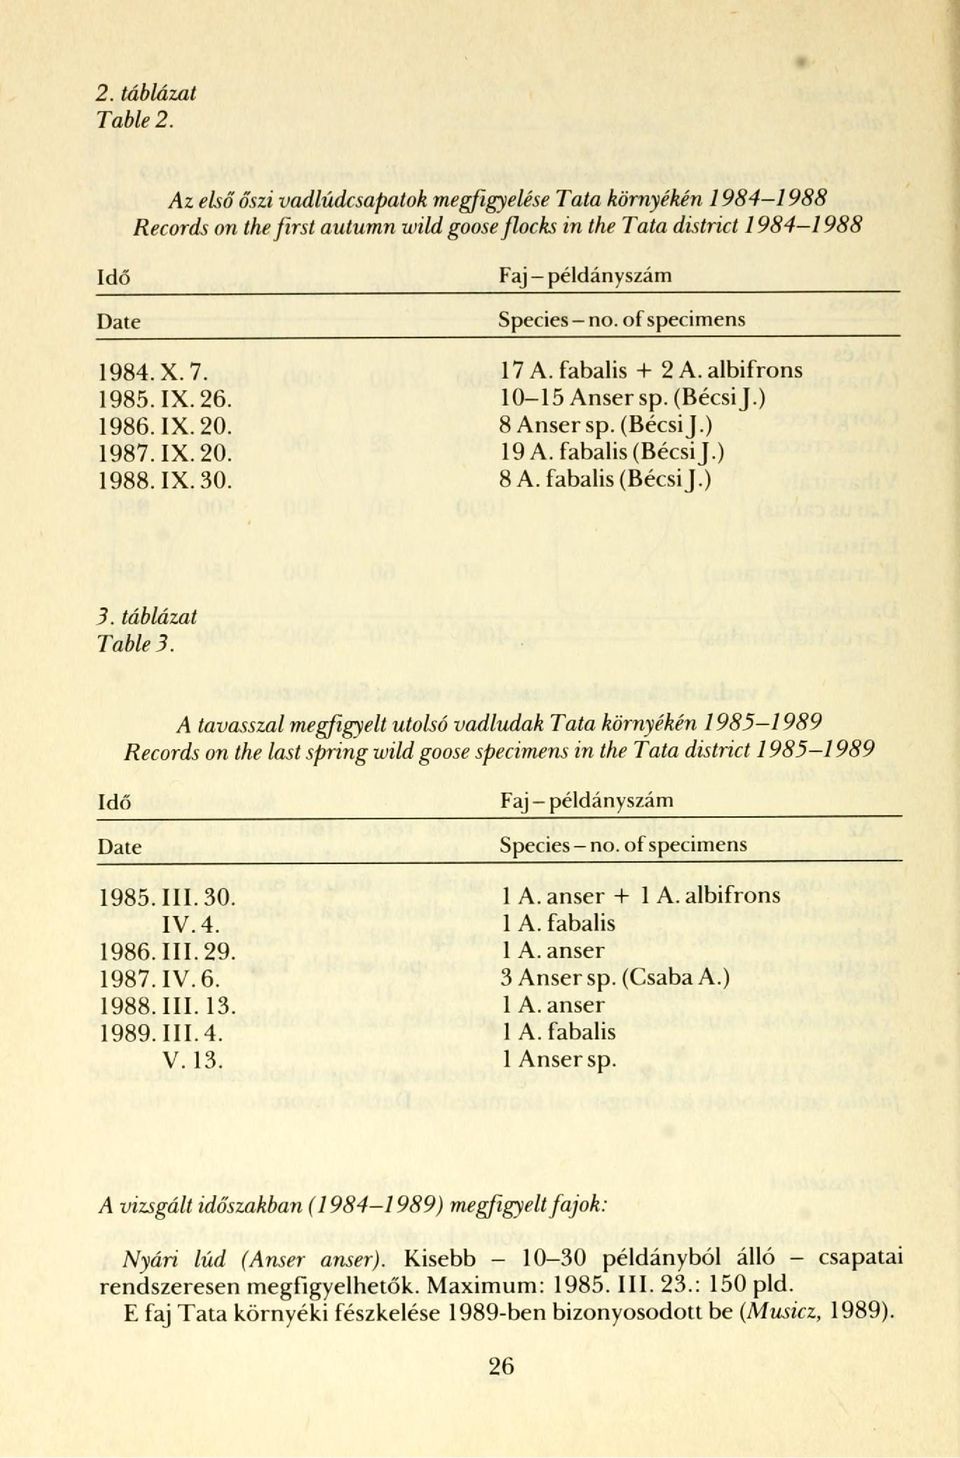 X. 7. 17 A. fabalis + 2A.albifrons 1985. IX. 26. 10-15 Anser sp. (Bécsi J.) 1986. IX. 20. 8 Anser sp. (Bécsi J.) 1987. IX. 20. 19 A. fabalis (Bécsi J.) 1988. IX. 30. 8 A. fabalis (Bécsi J.) 3.